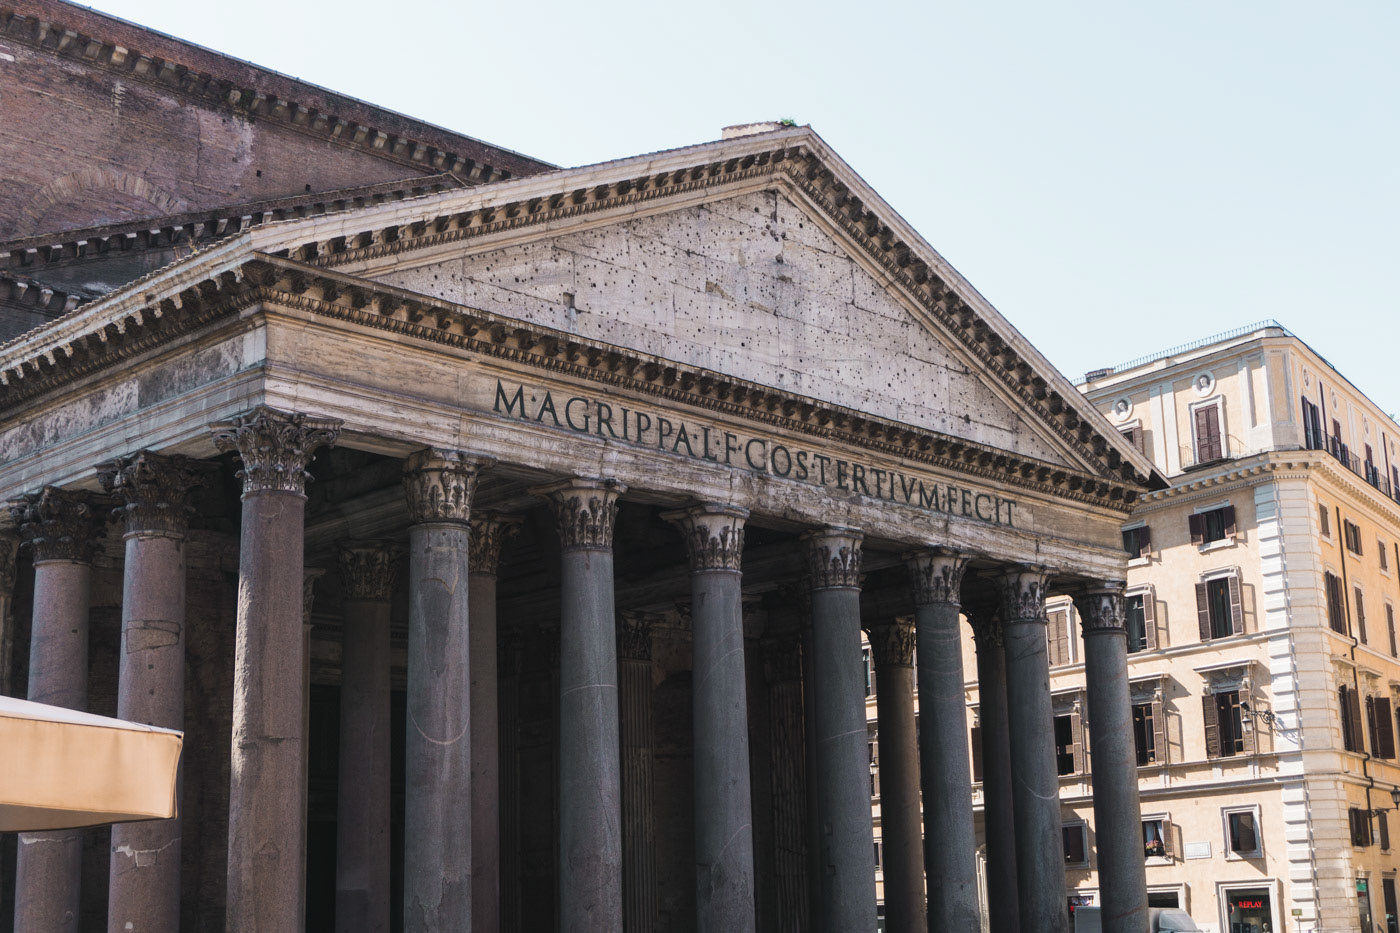 Rome roma Coloseo Colosseo Italy photo Photography  Fotografia explore adventure